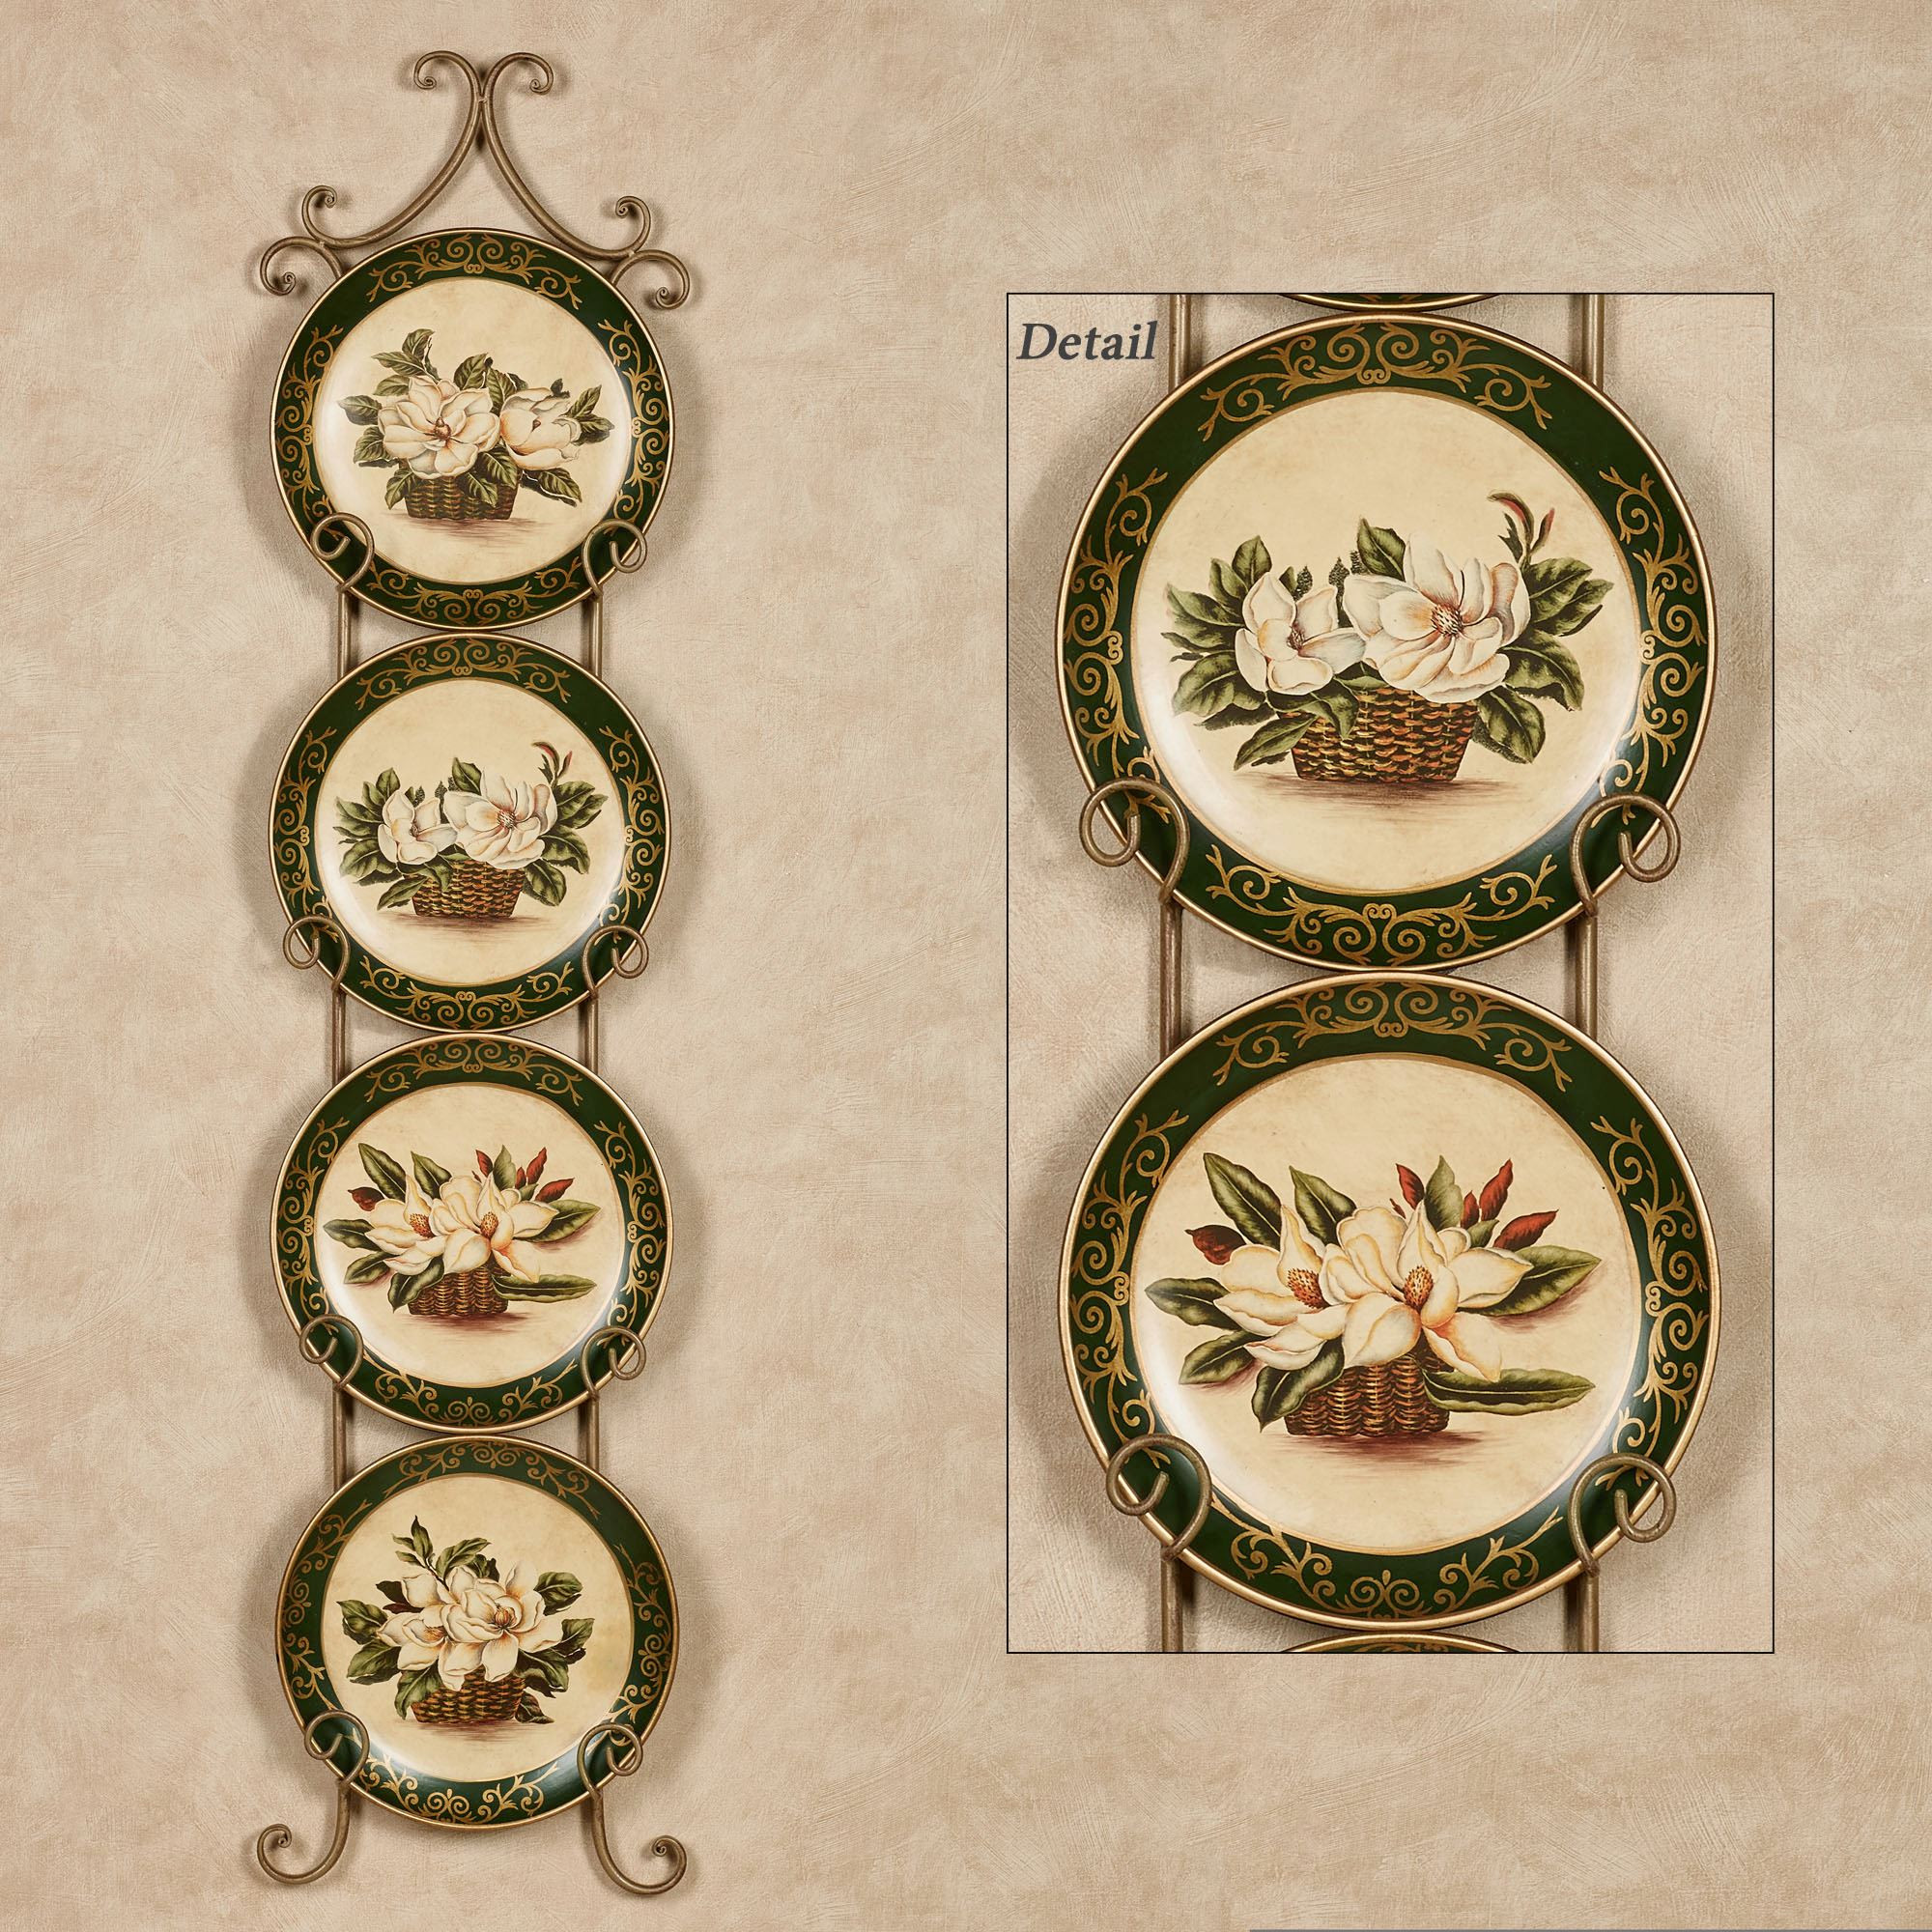 Decorative Plates For Kitchen Wall
 Magnolia Floral Decorative Plate Set